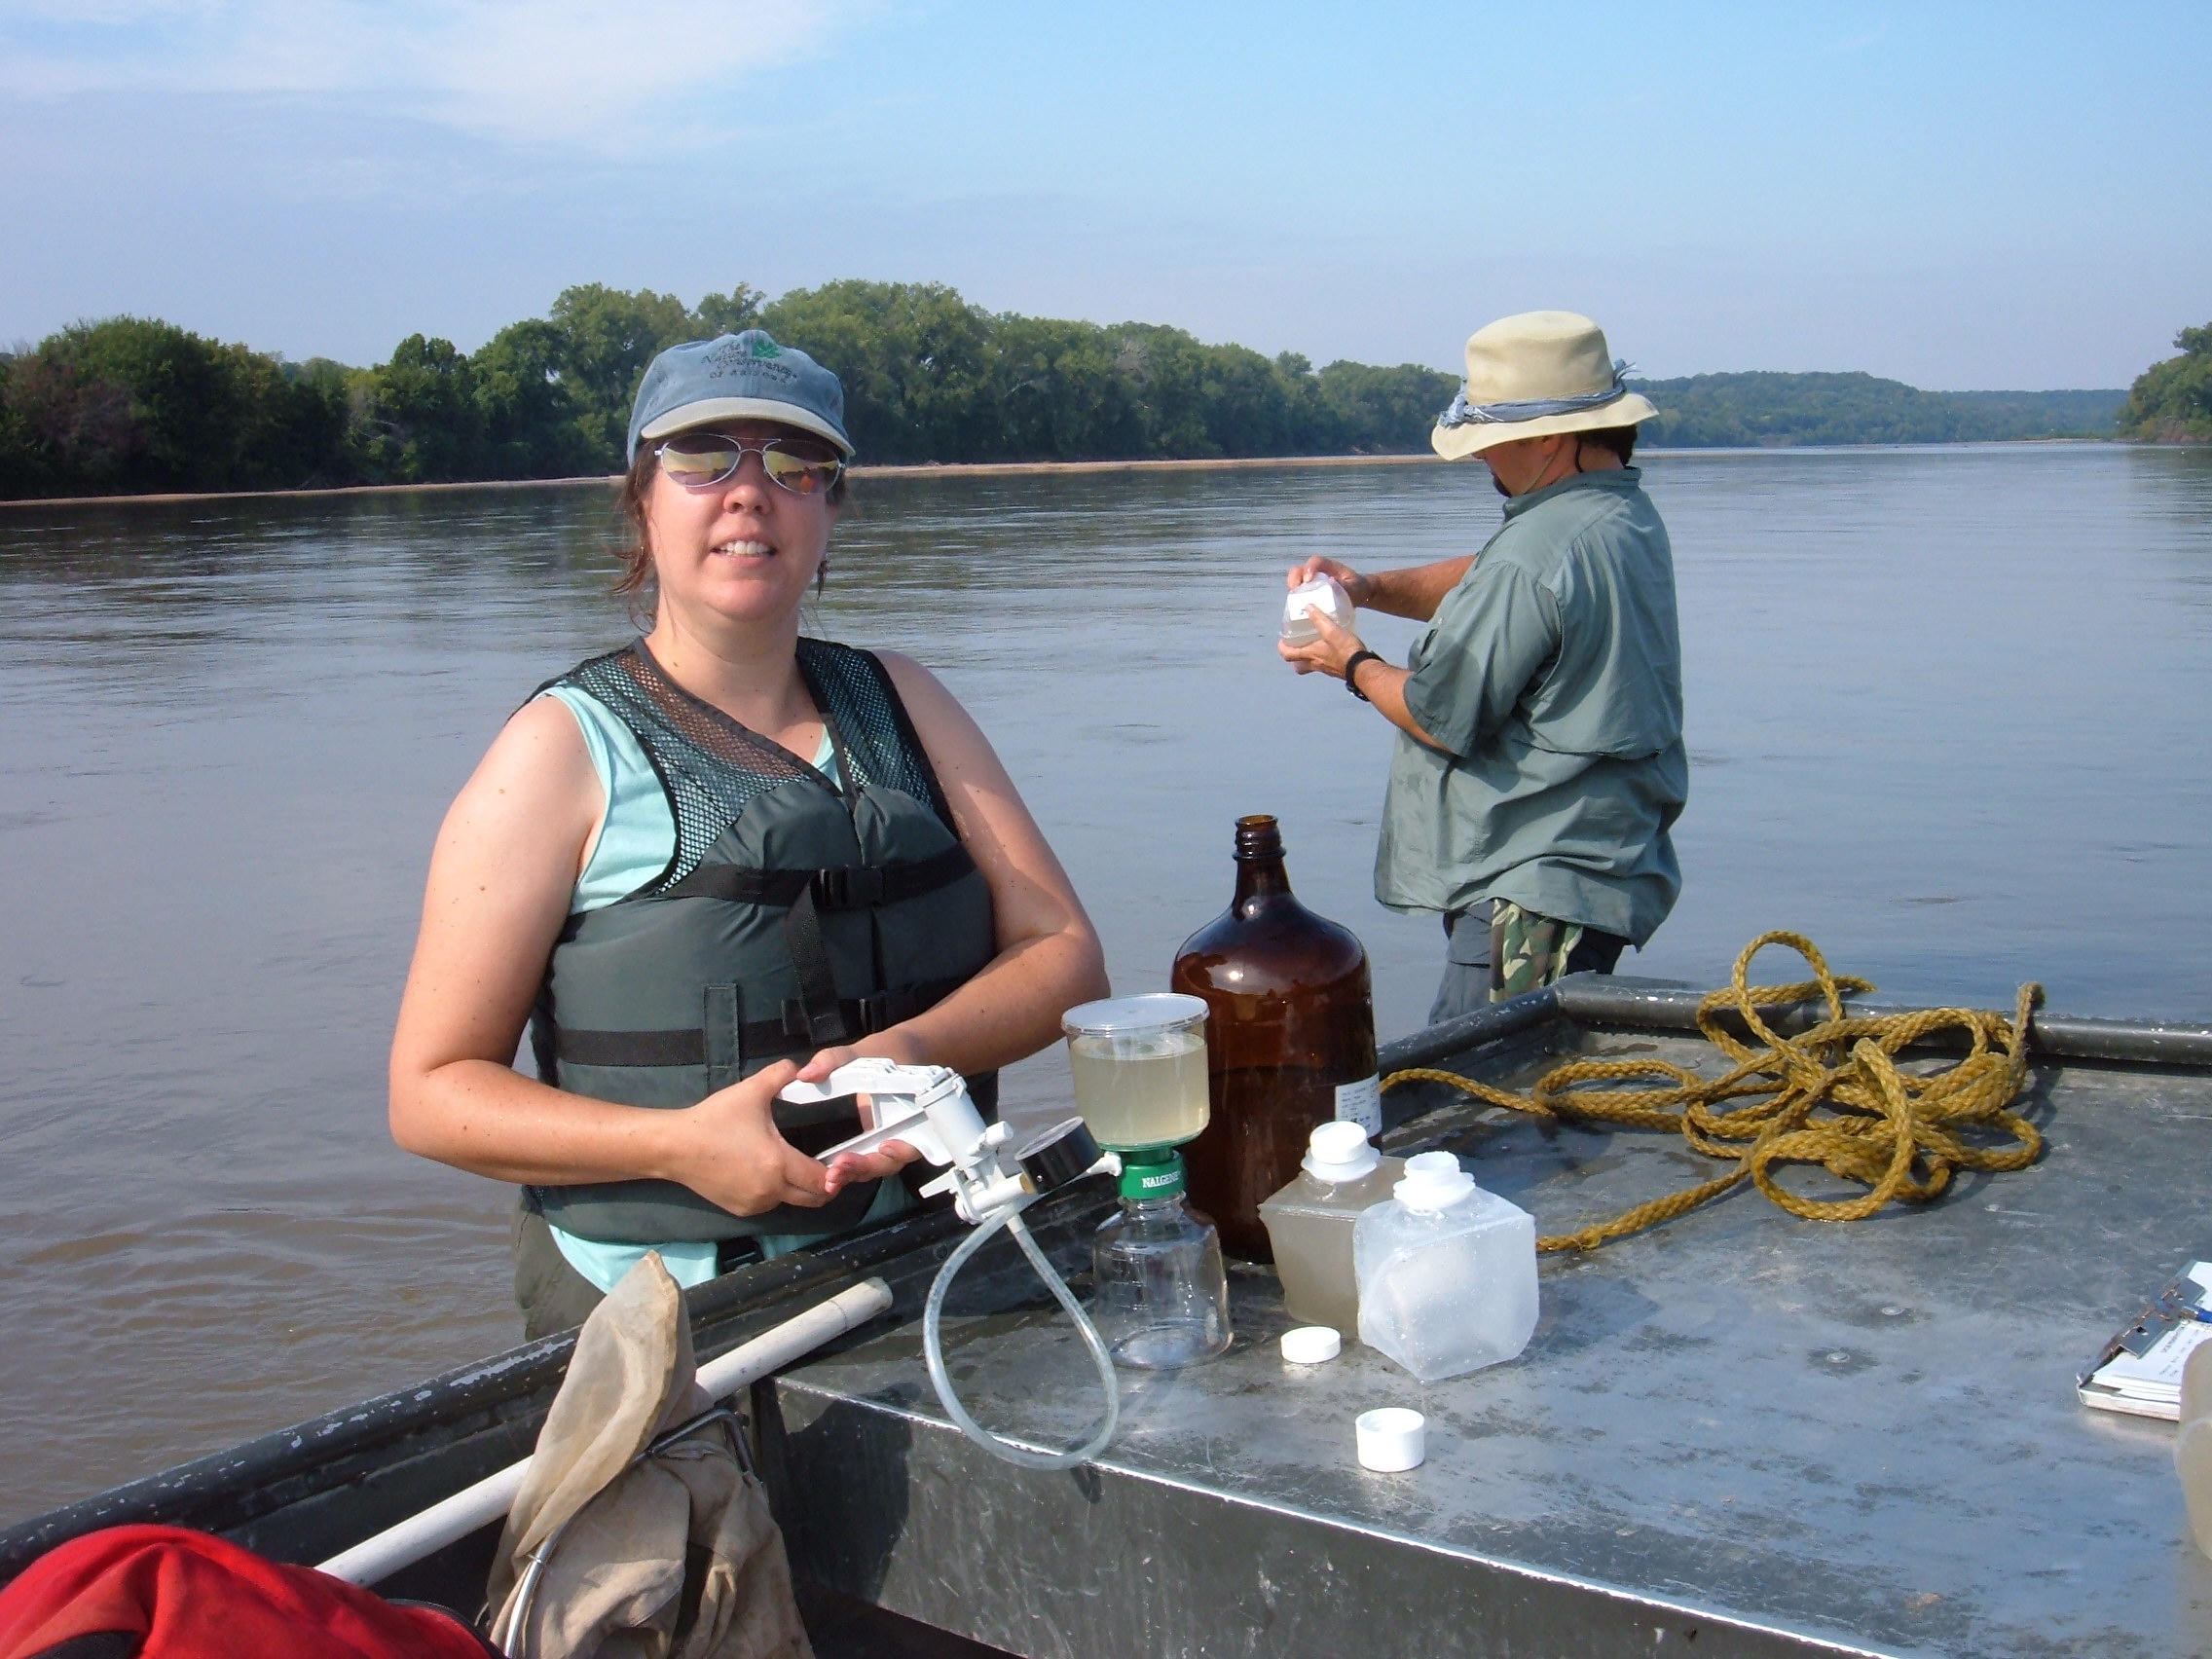 Filtering samples on the Kansas River in 2007.